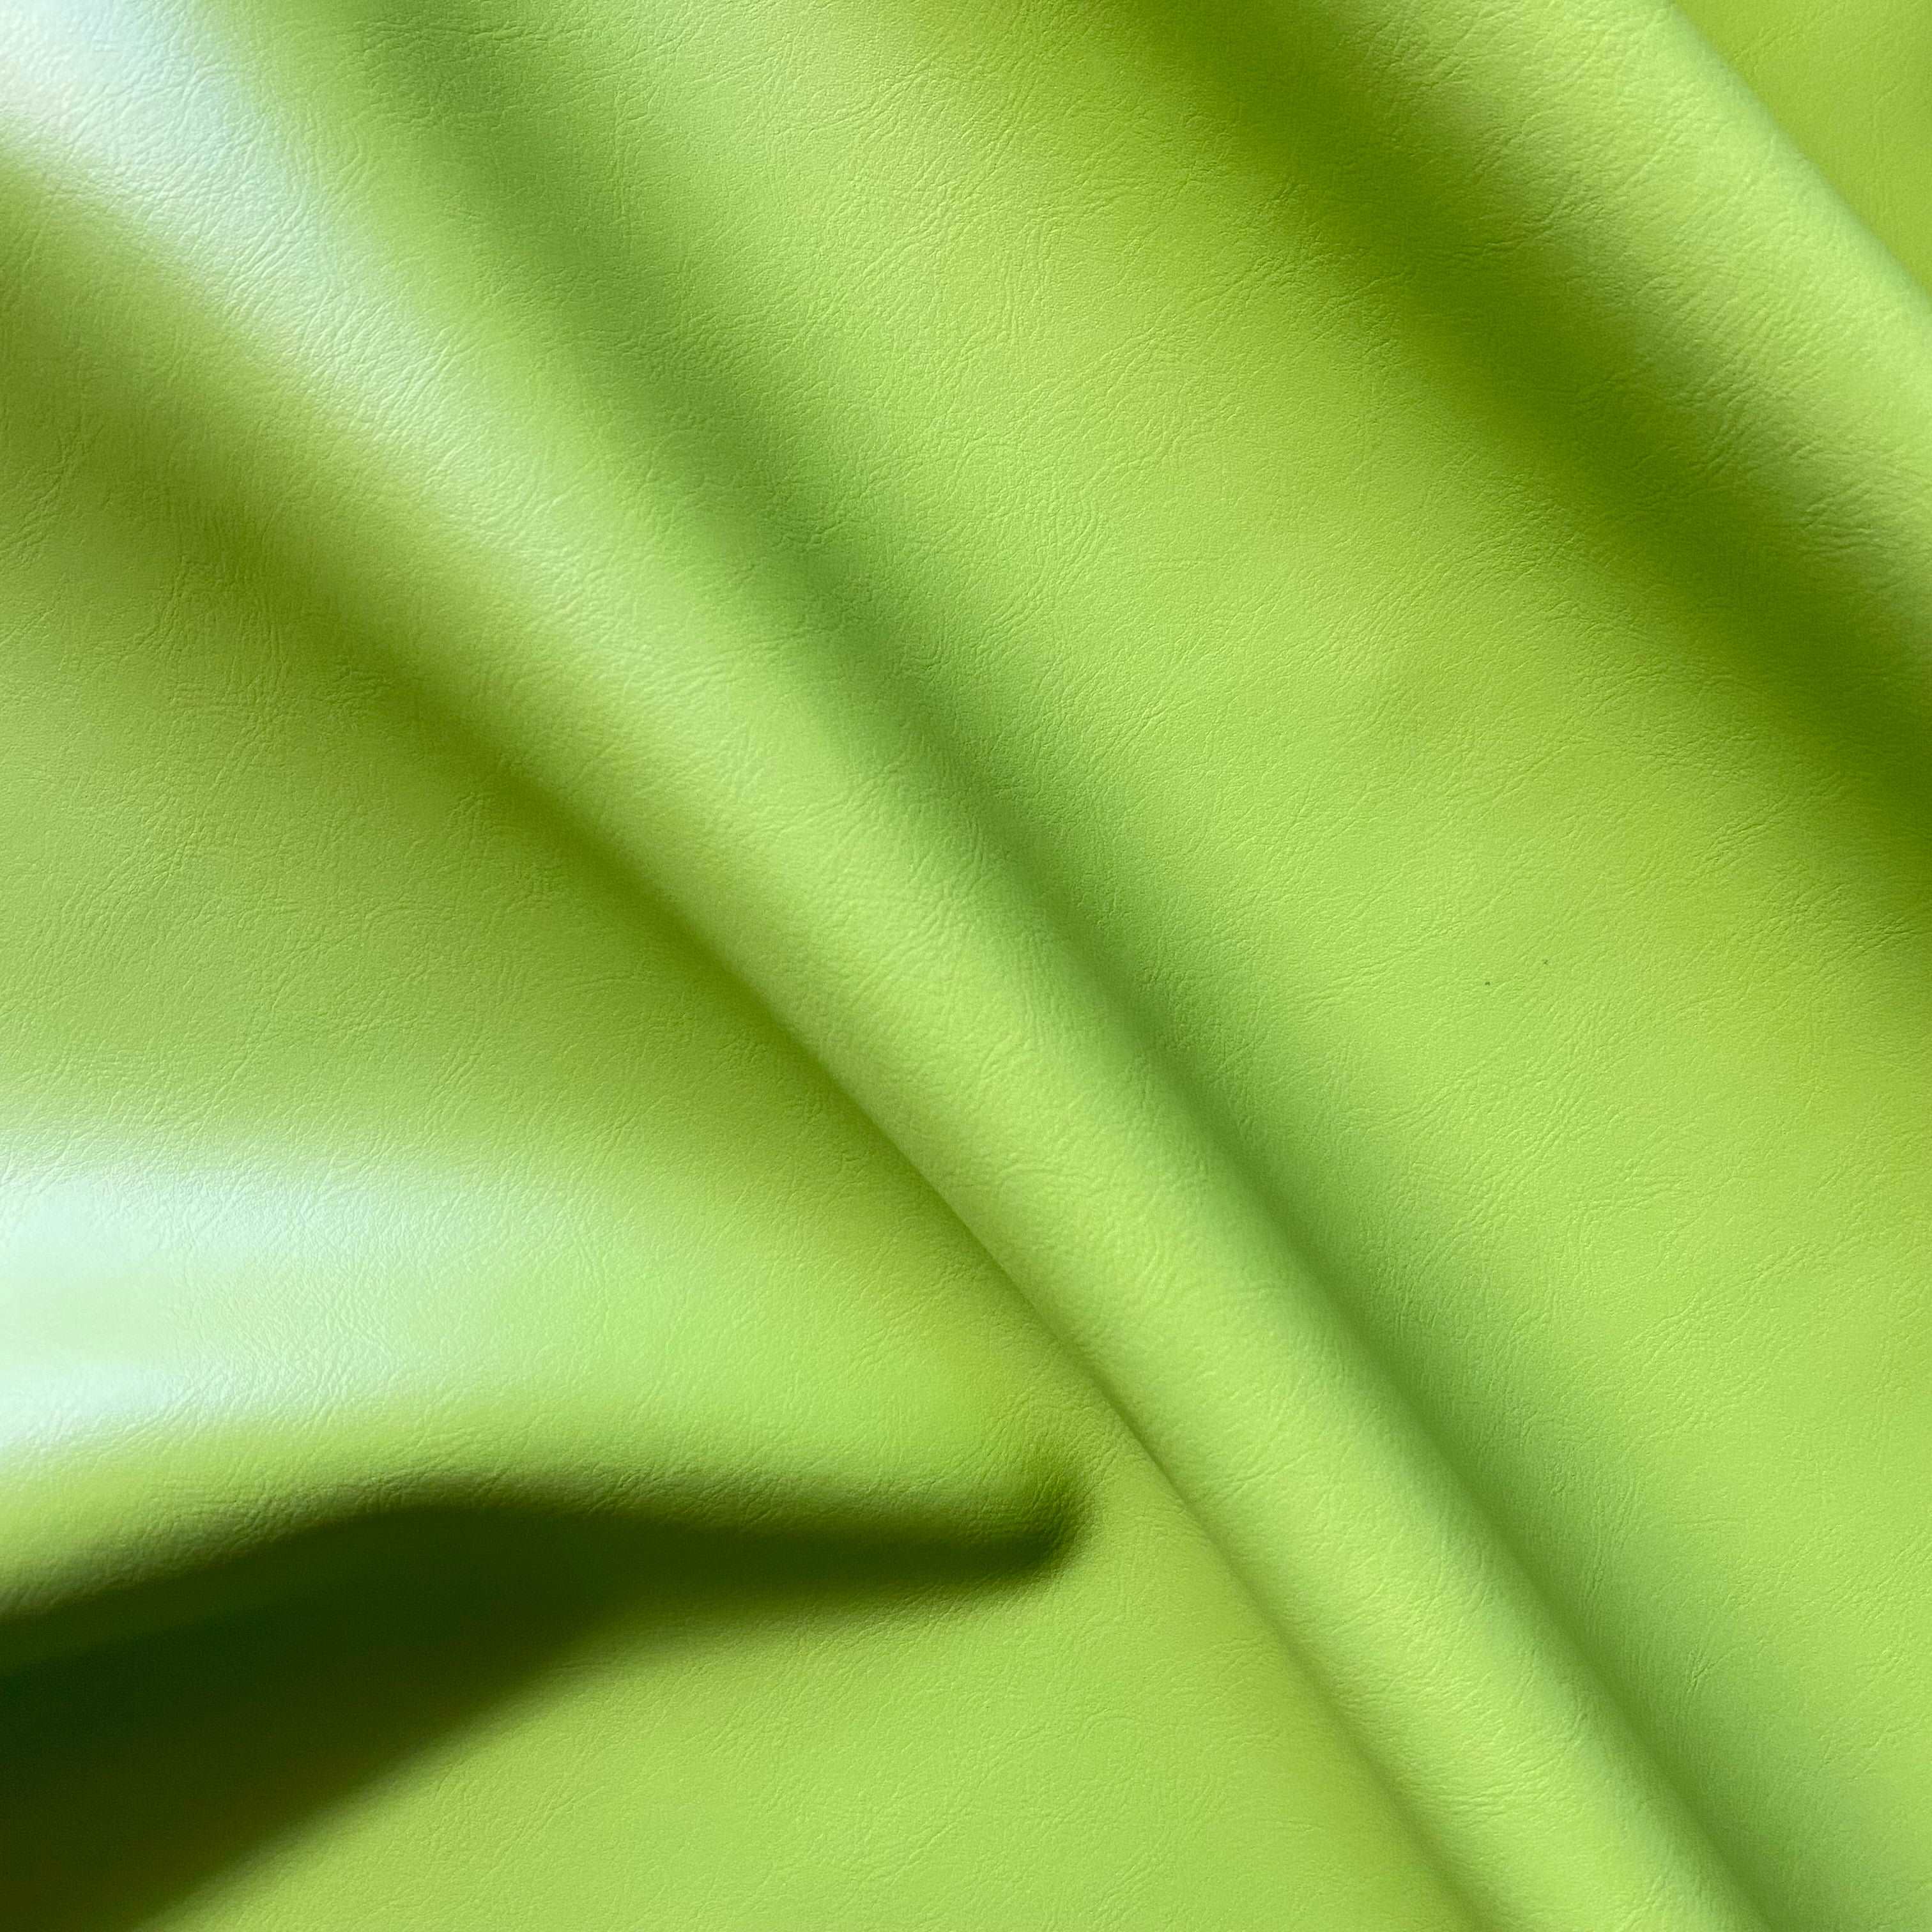 Bentwood upholstery vinyl lime green